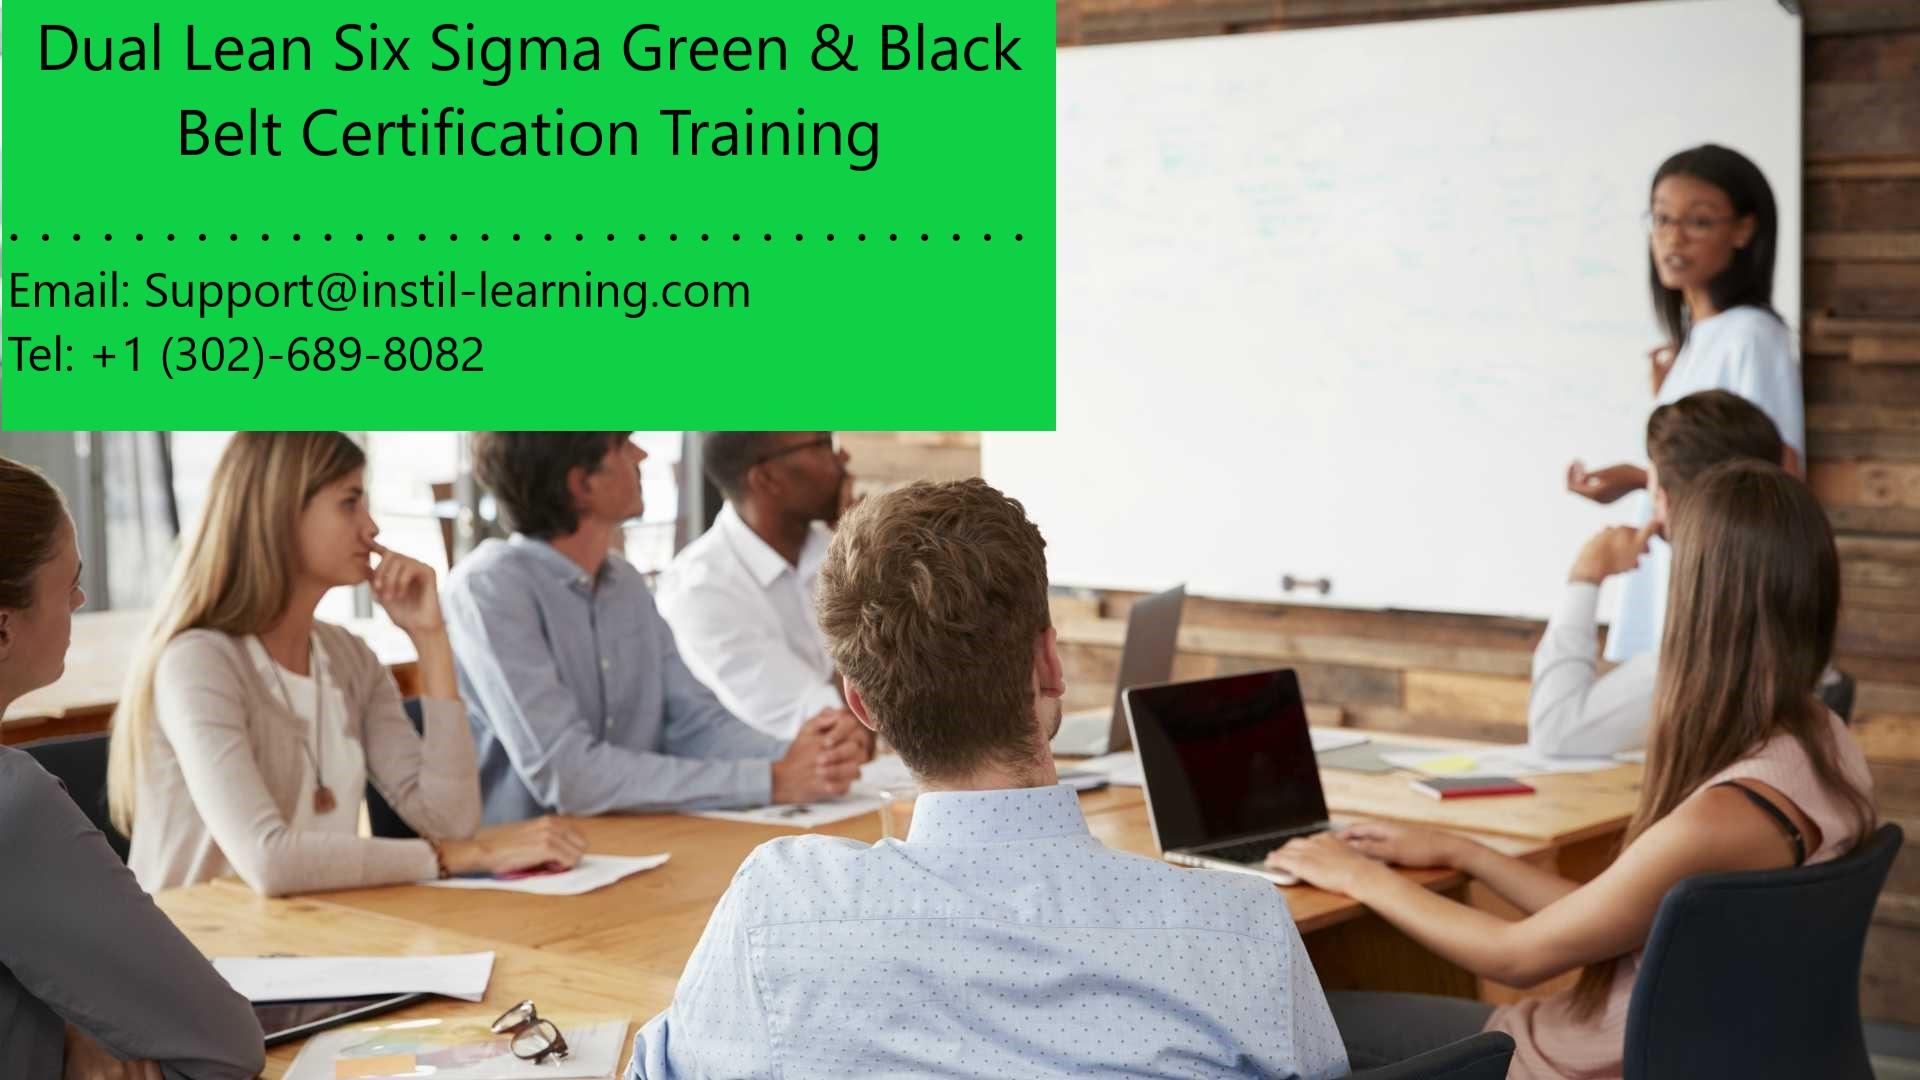 Dual Lean Six Sigma Green & Black Belt Training in Boise, ID